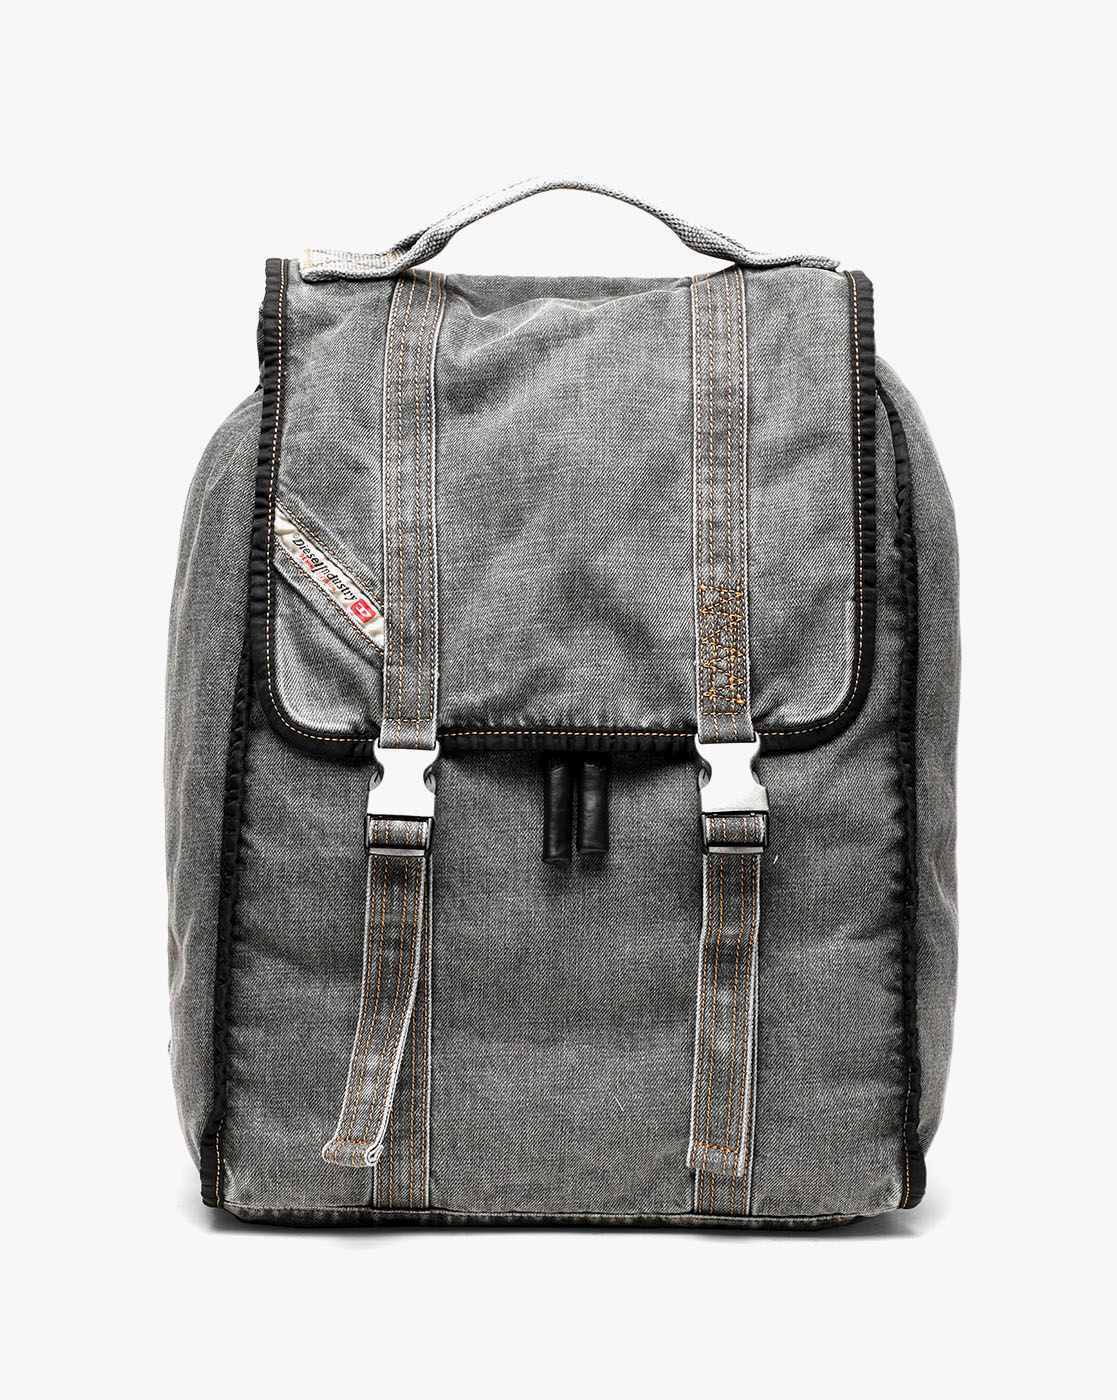 Buy Green Apple Bags 30 Ltrs Black Denim Backpack (Model - DENIM101) at  Amazon.in